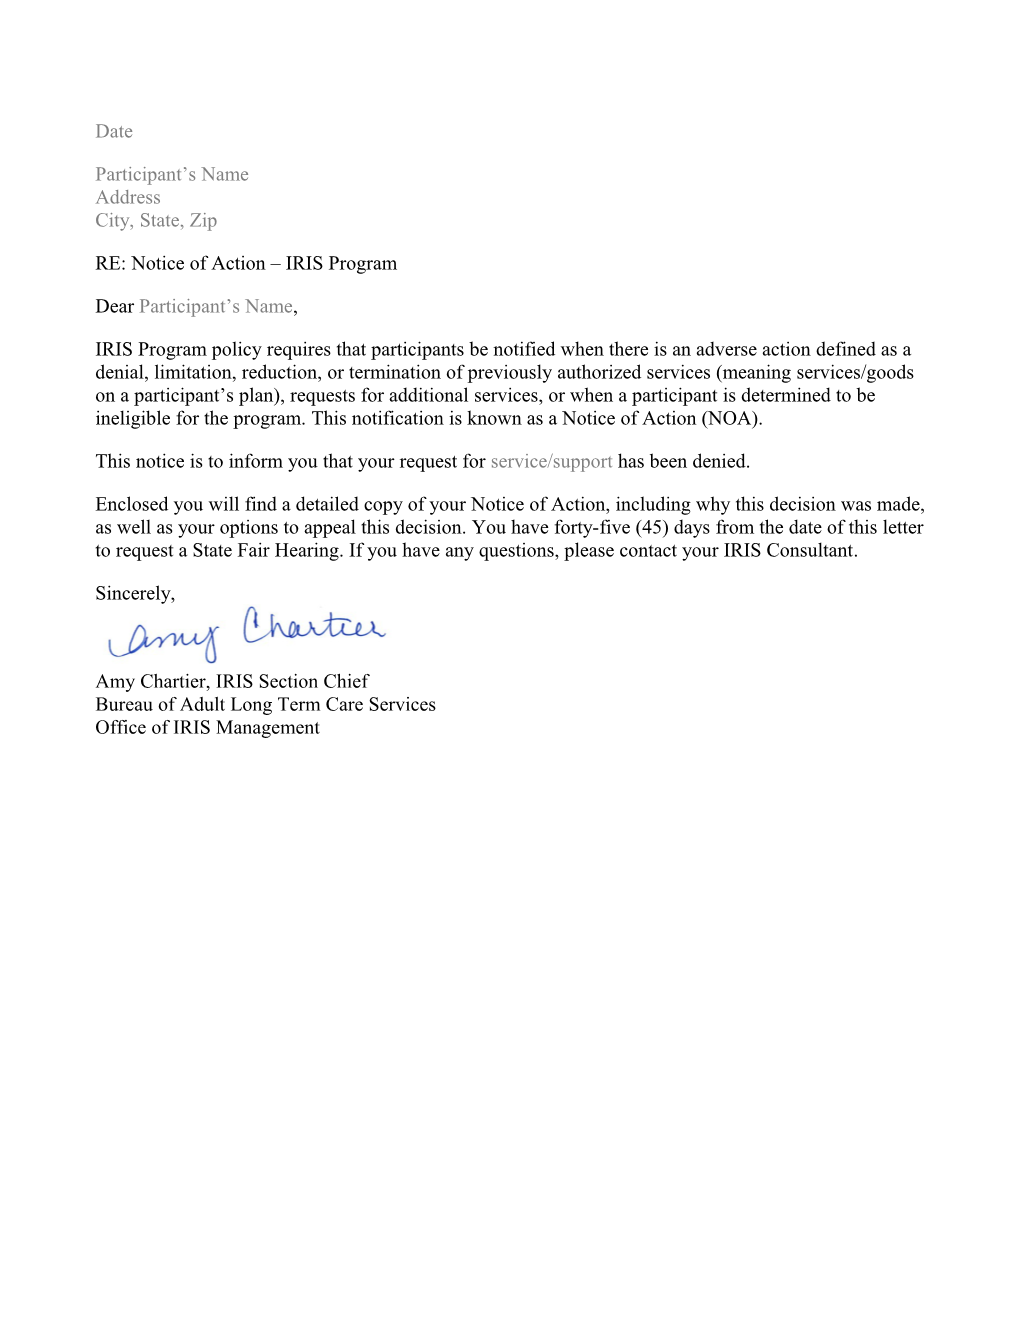 IRIS Notice of Action Letter Denial